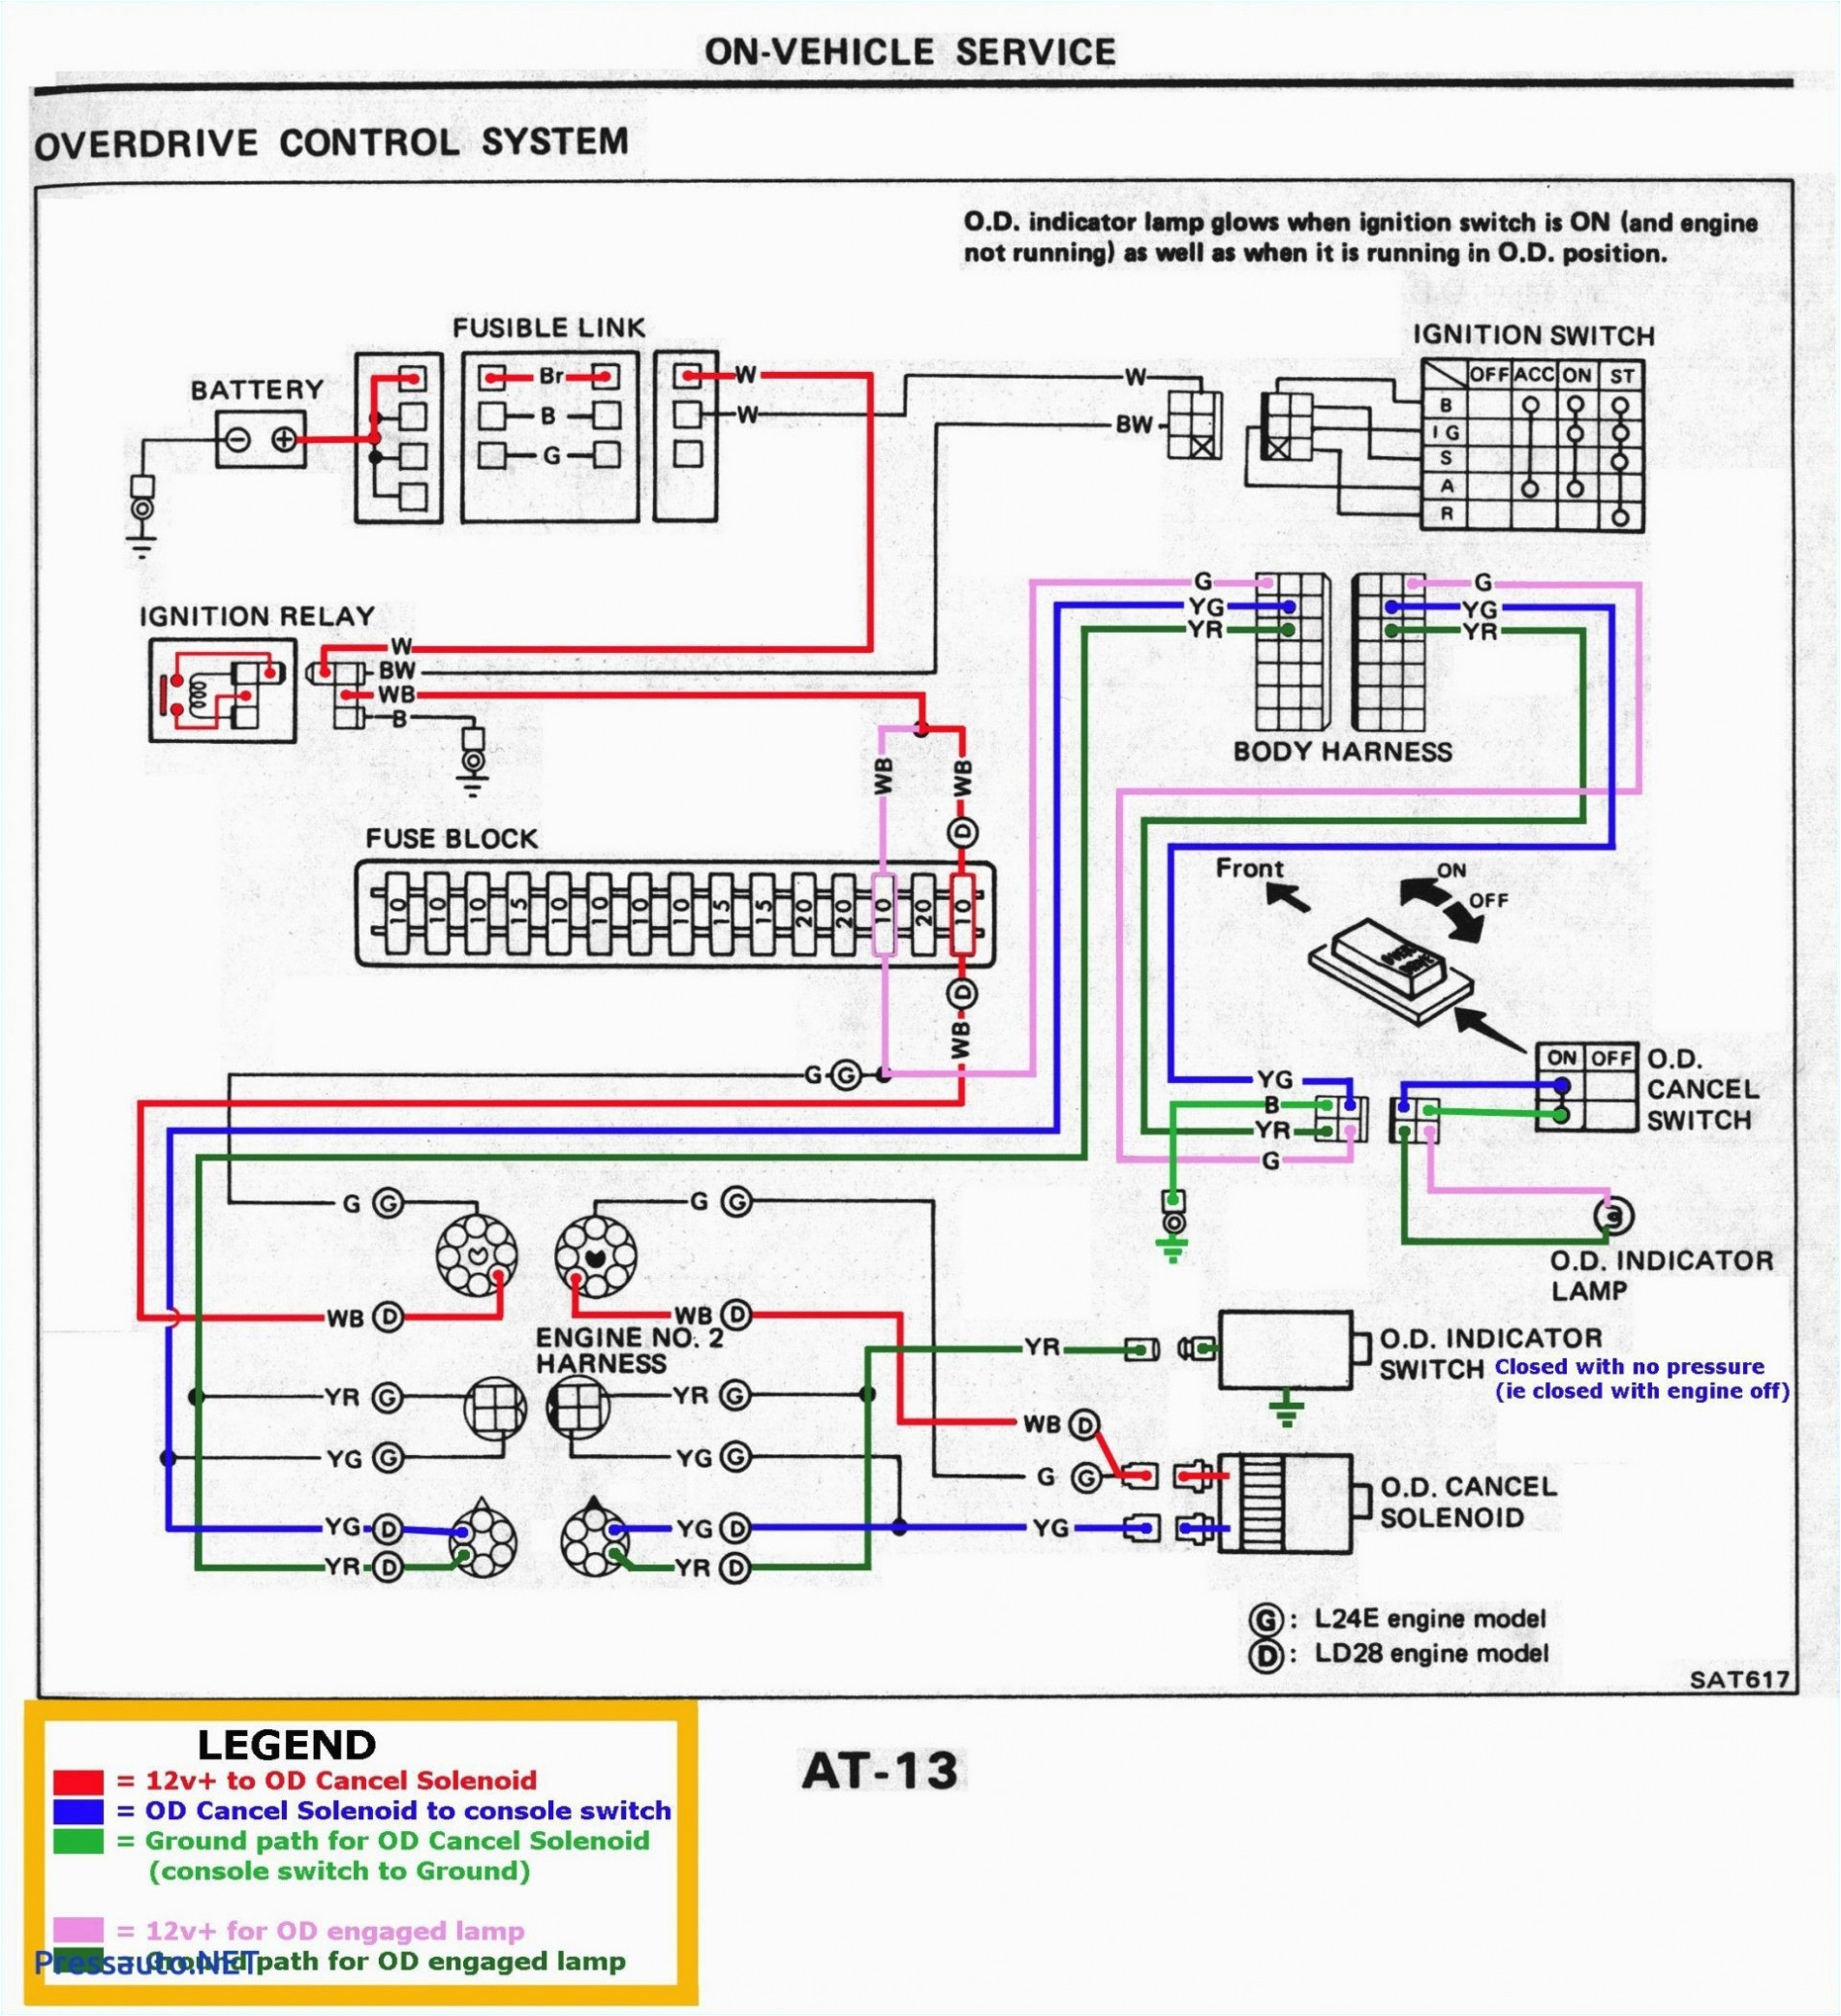 Starting Capacitor Wiring Diagram Weg Motor Capacitor Wiring Wiring Diagram Paper